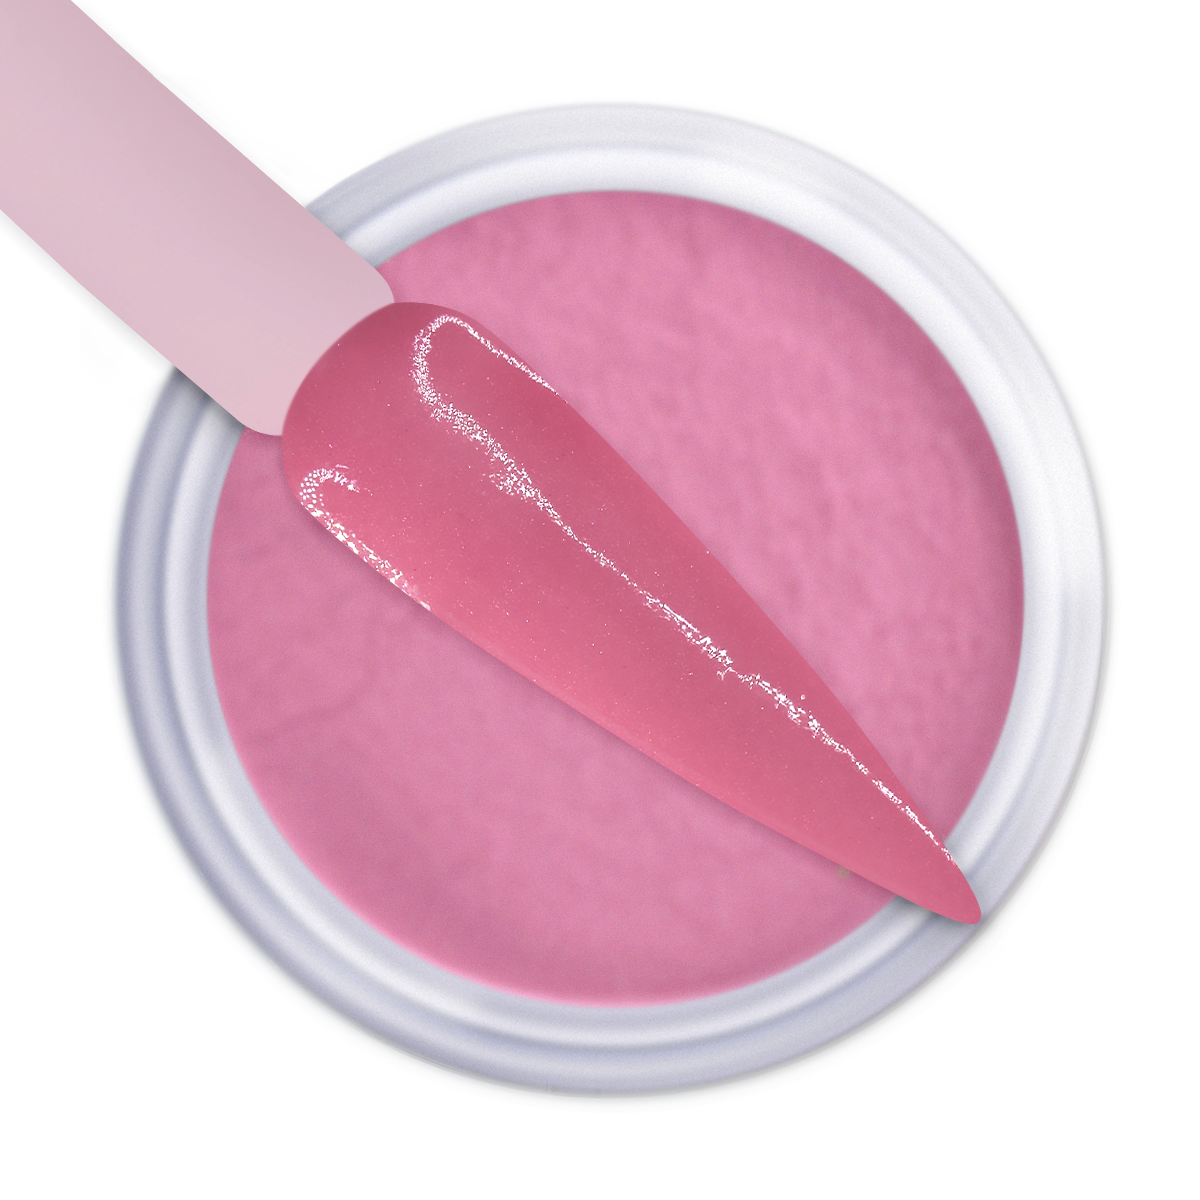 Dip & Dap Powder - DD142 Vanity Pink